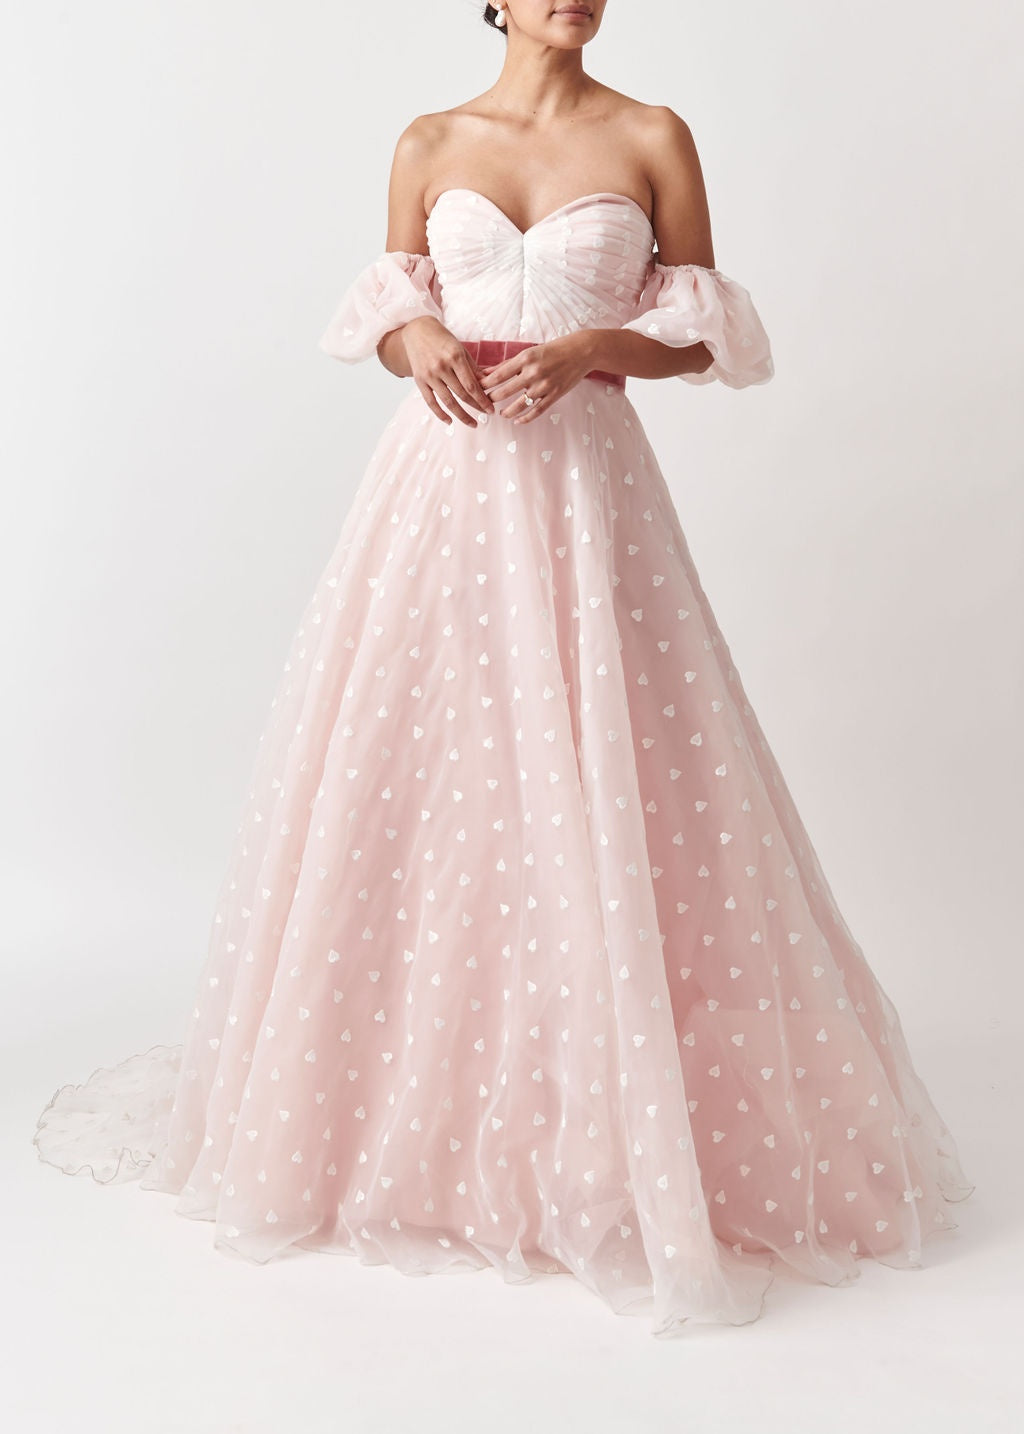 Bonnie Sweetheart Neckline Wedding Dress